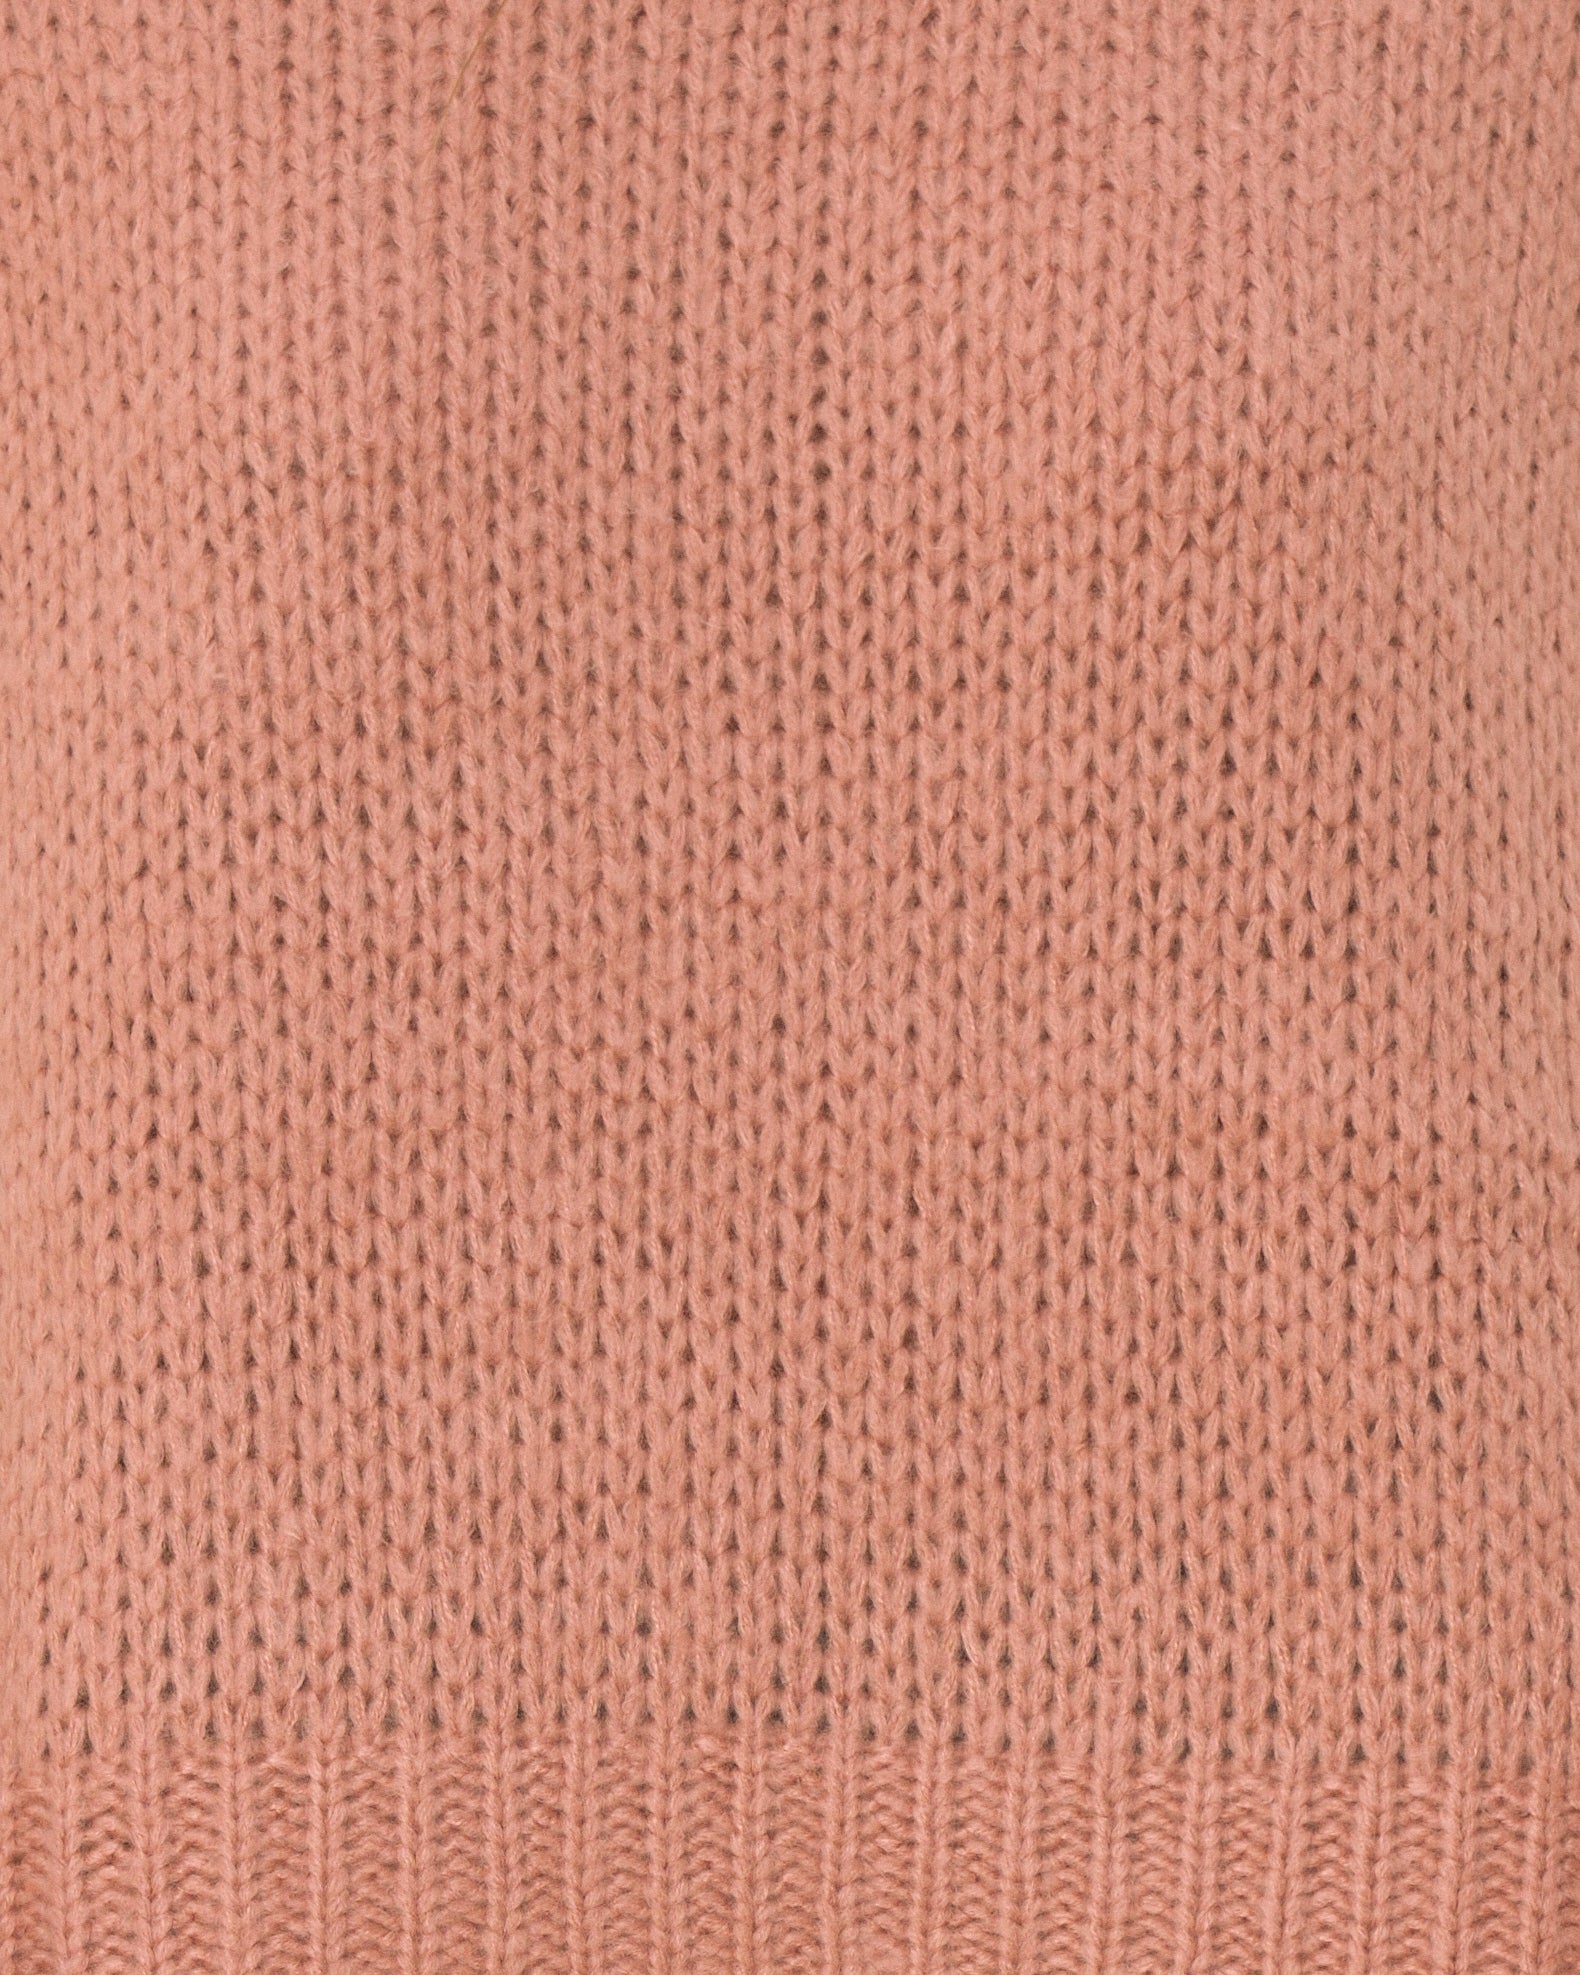 Rose Pink Knit Sweater